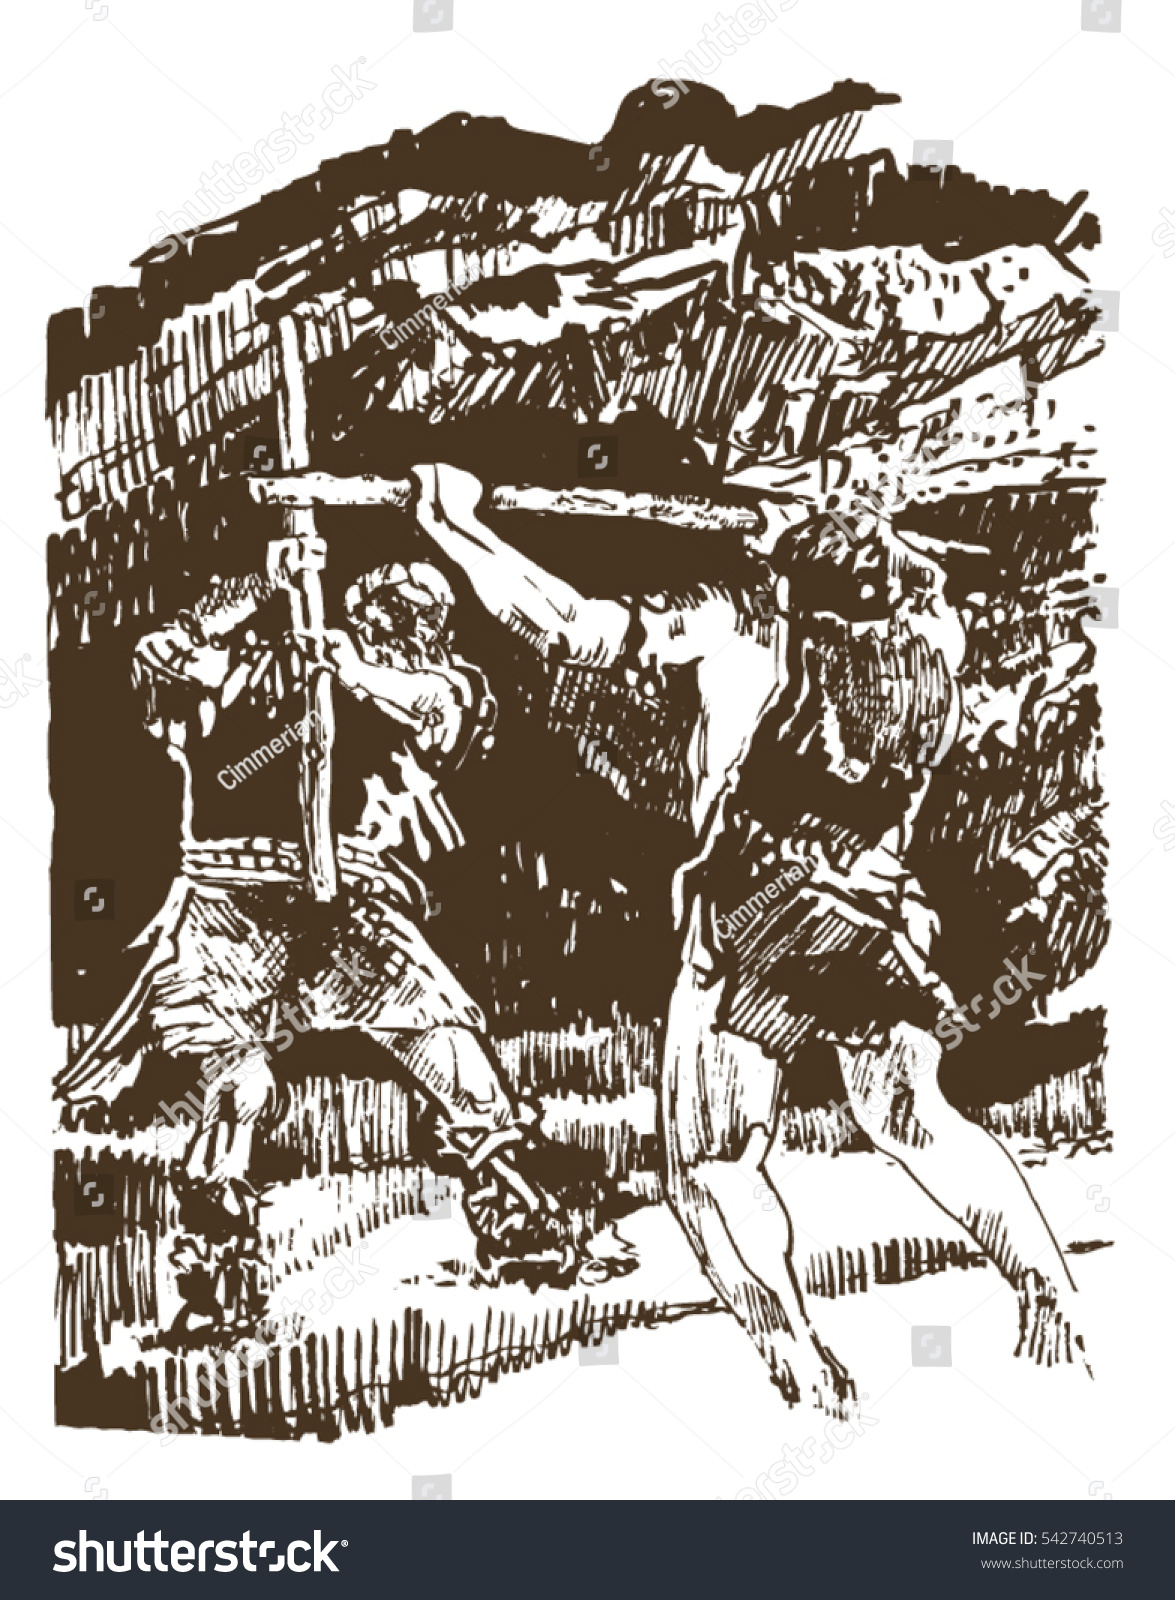 SVG of The battle of two men of Cro-Magnon (Homo sapiens). Hand drawn illustration. svg